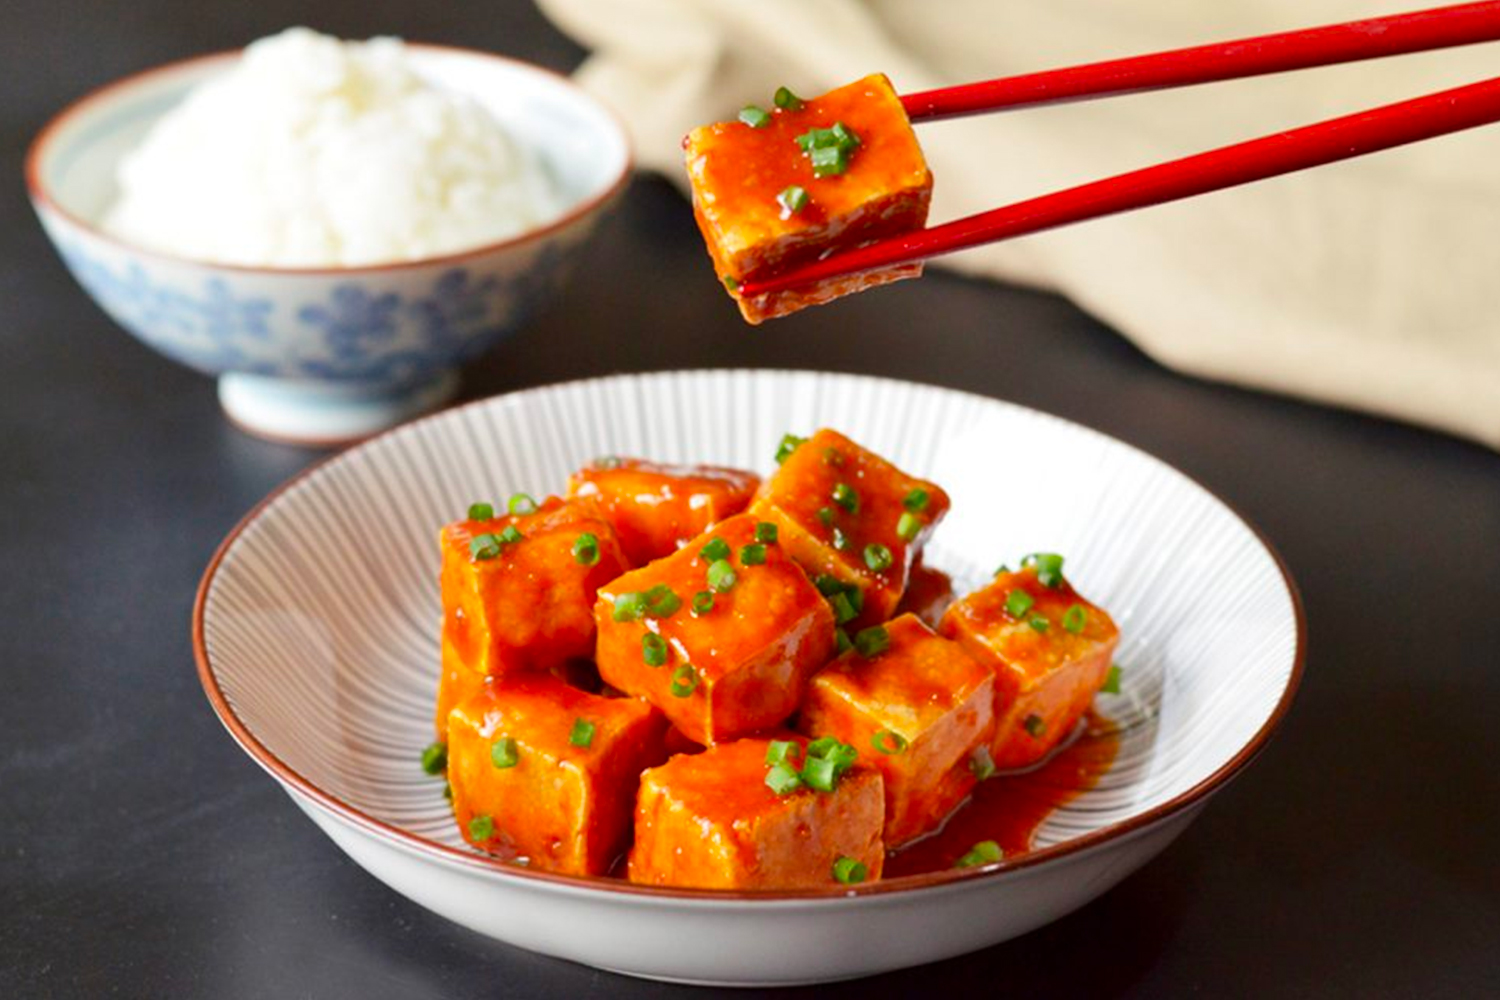 https://asianinspirations.com.au/wp-content/uploads/2021/04/Air-Fryer-RecipesABC_01-Nana-Secret-Air-Fryer-Tofu.jpg